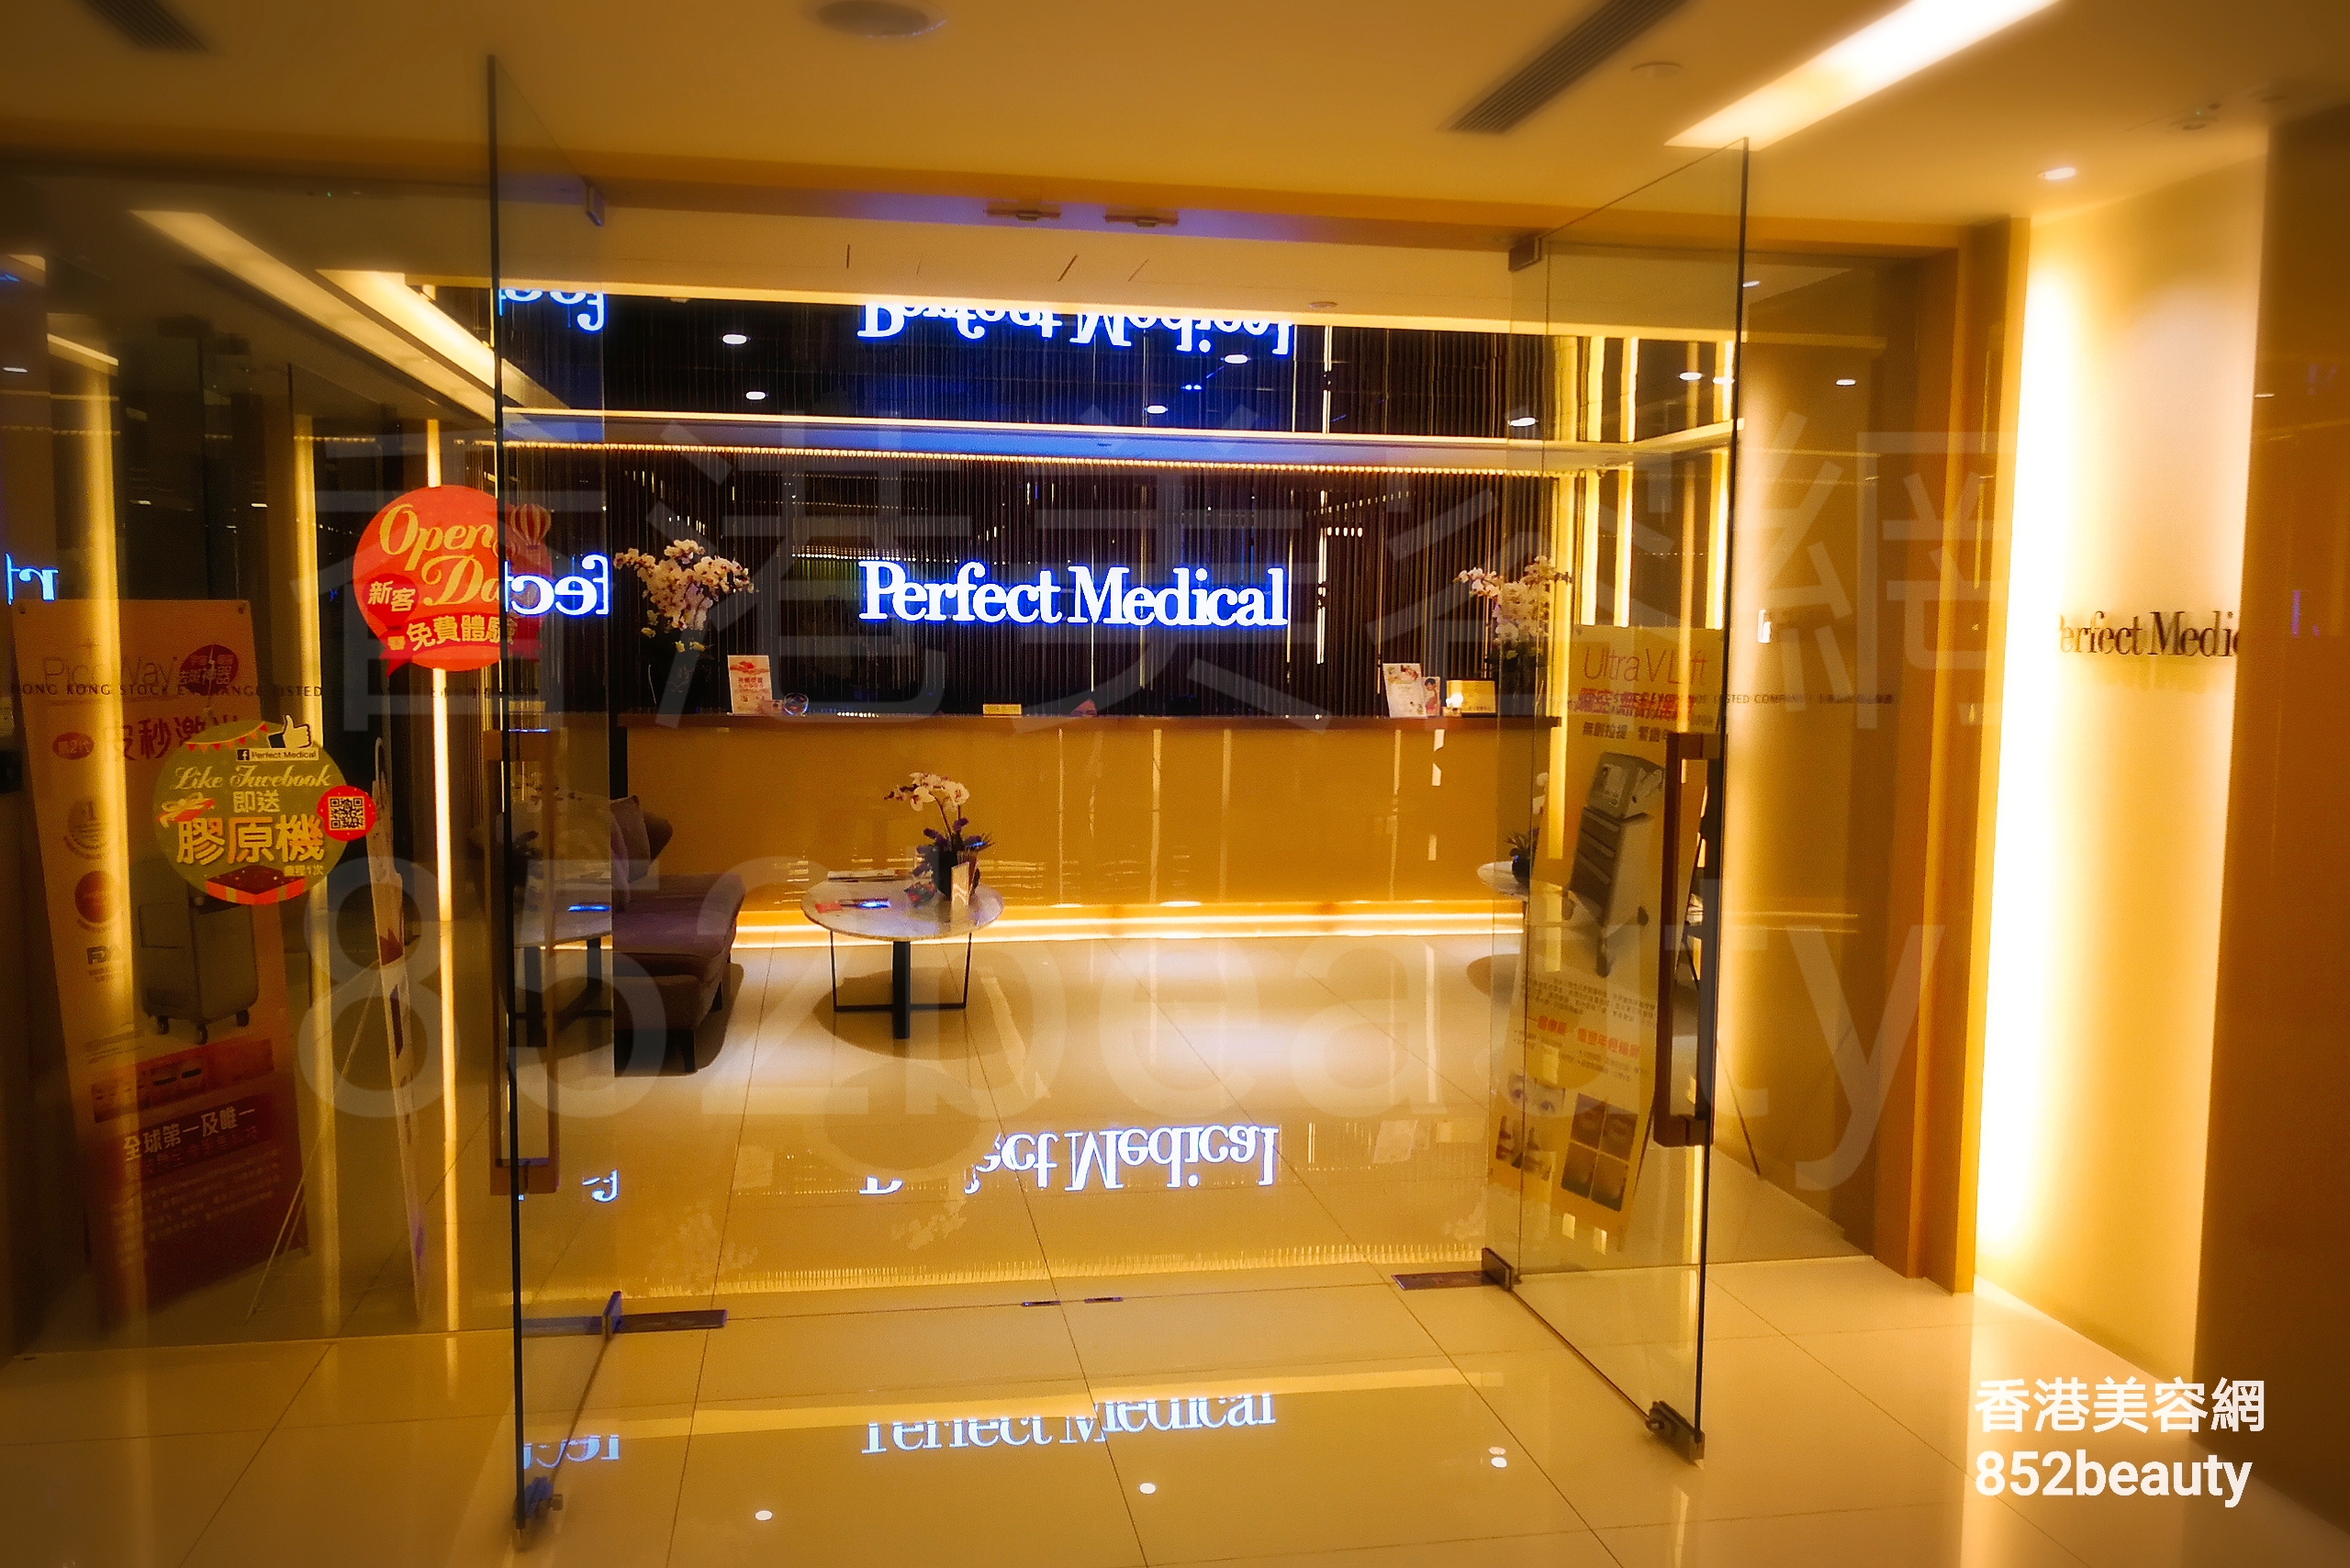 香港美容網 Hong Kong Beauty Salon 美容院 / 美容師: Perfect Medical (沙田分店)